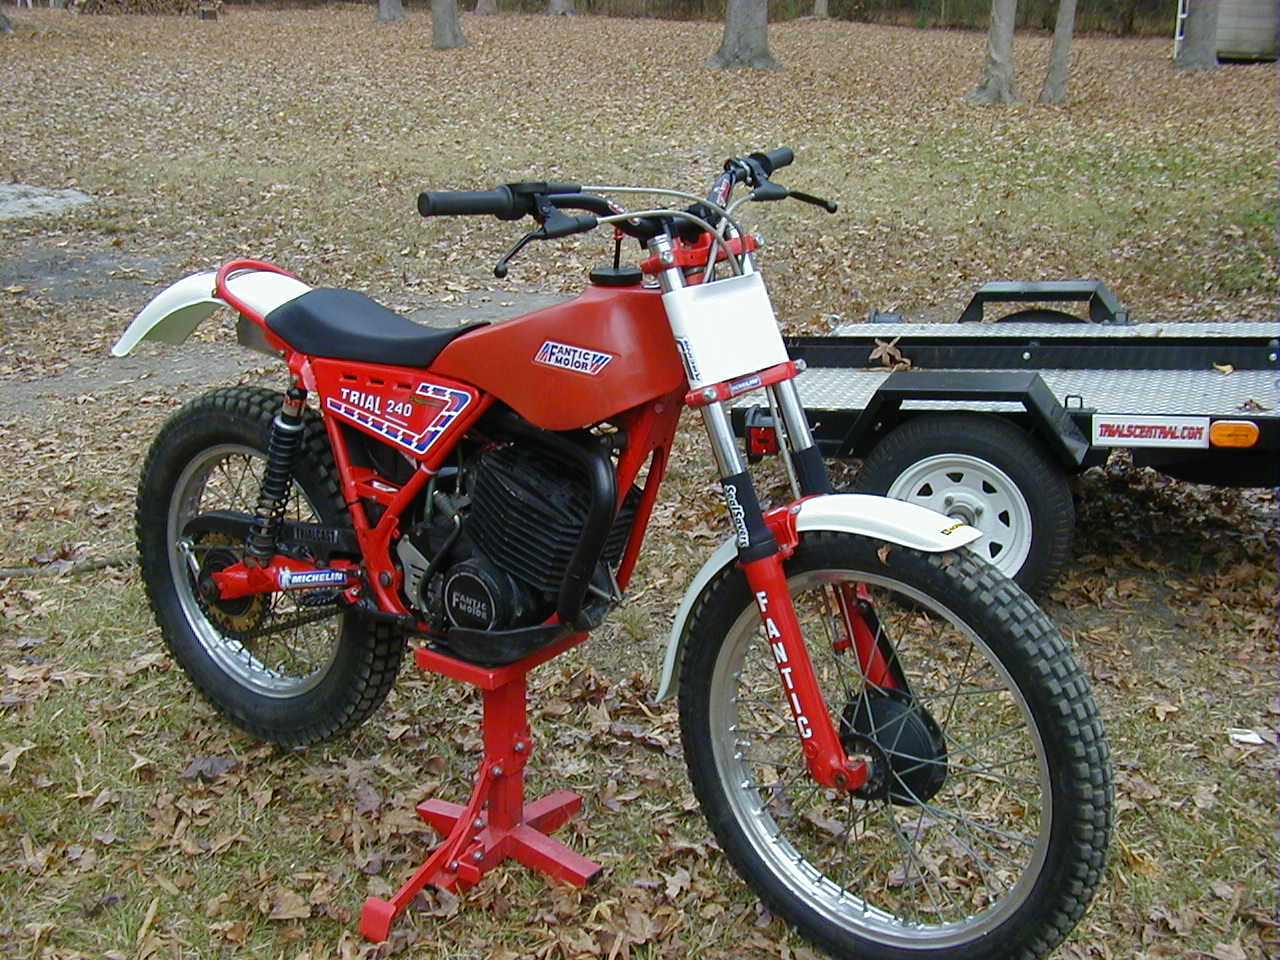 fantic 250 trials bike